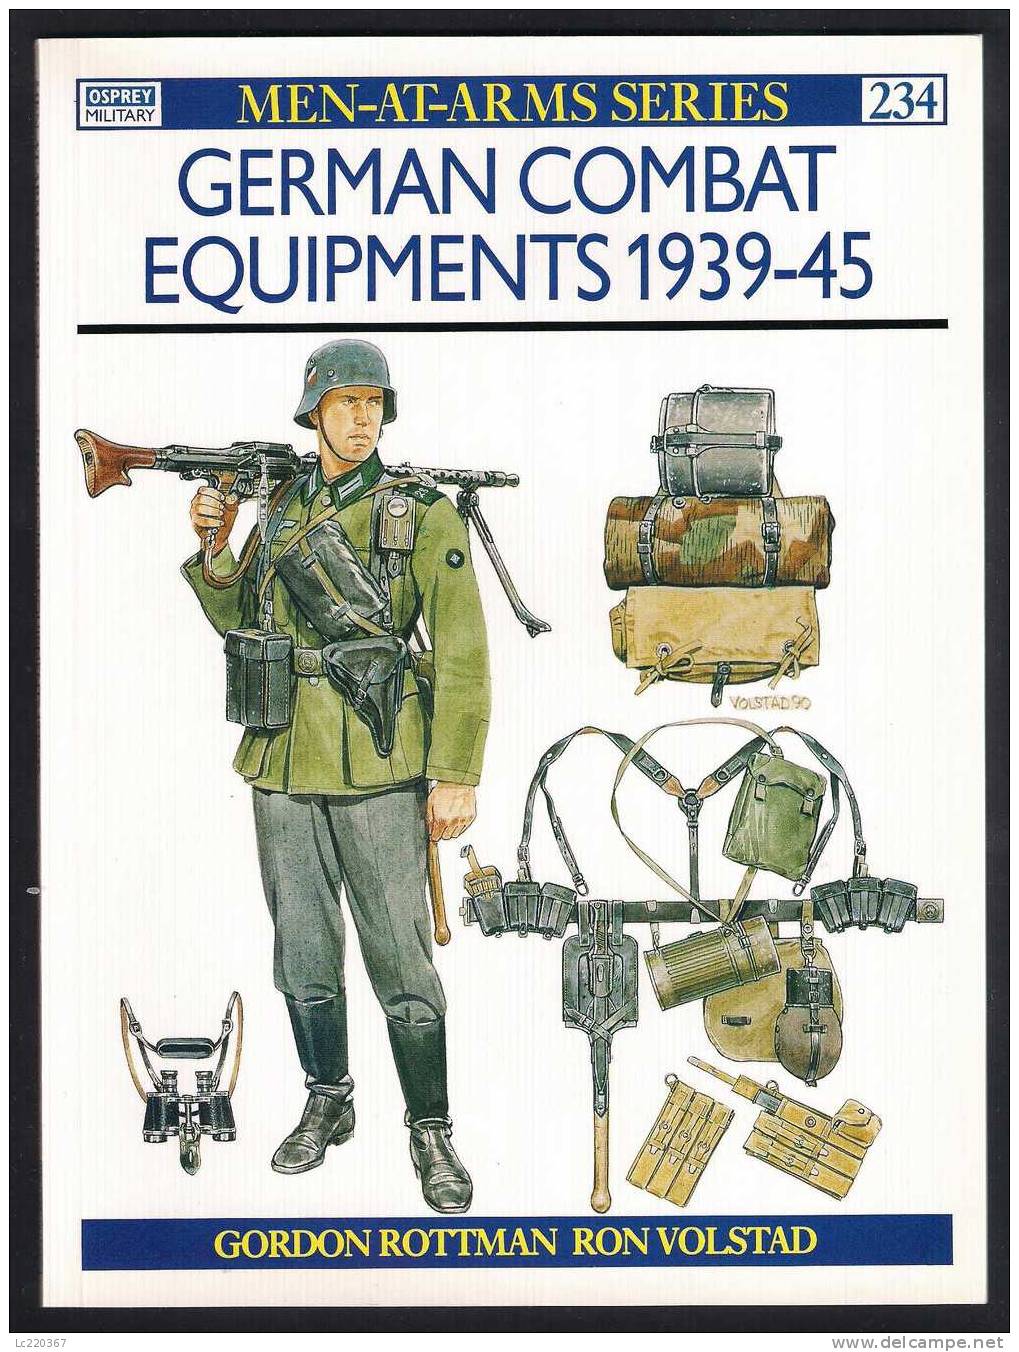 OSPREY MILITARY MEN-AT-ARMS SERIES NR.234 GERMAN COMBAT EQUIPMENTS 1939-45 GORDON ROTTMAN ISBN 0-85045-952-4 - Inglese